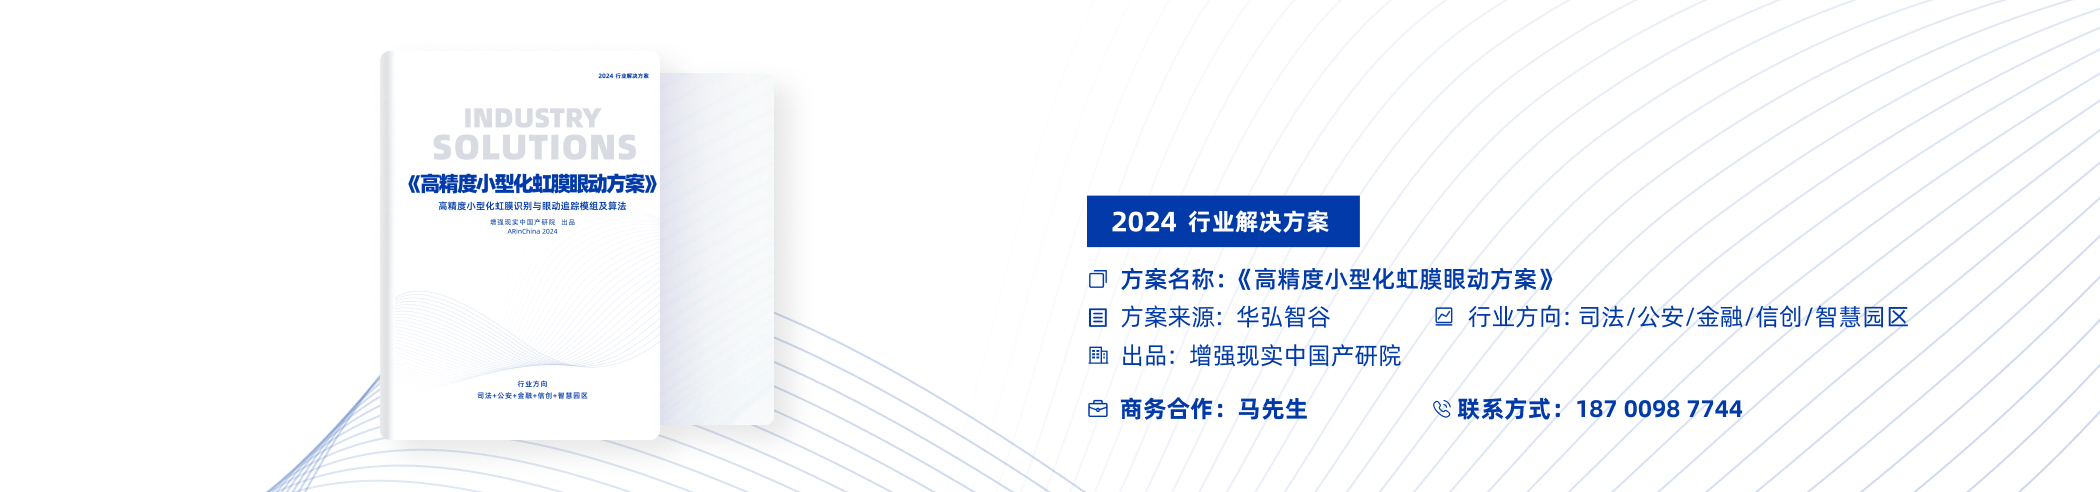 ARinChina 2023元宇宙年度荣誉榜——创新硬件榜单